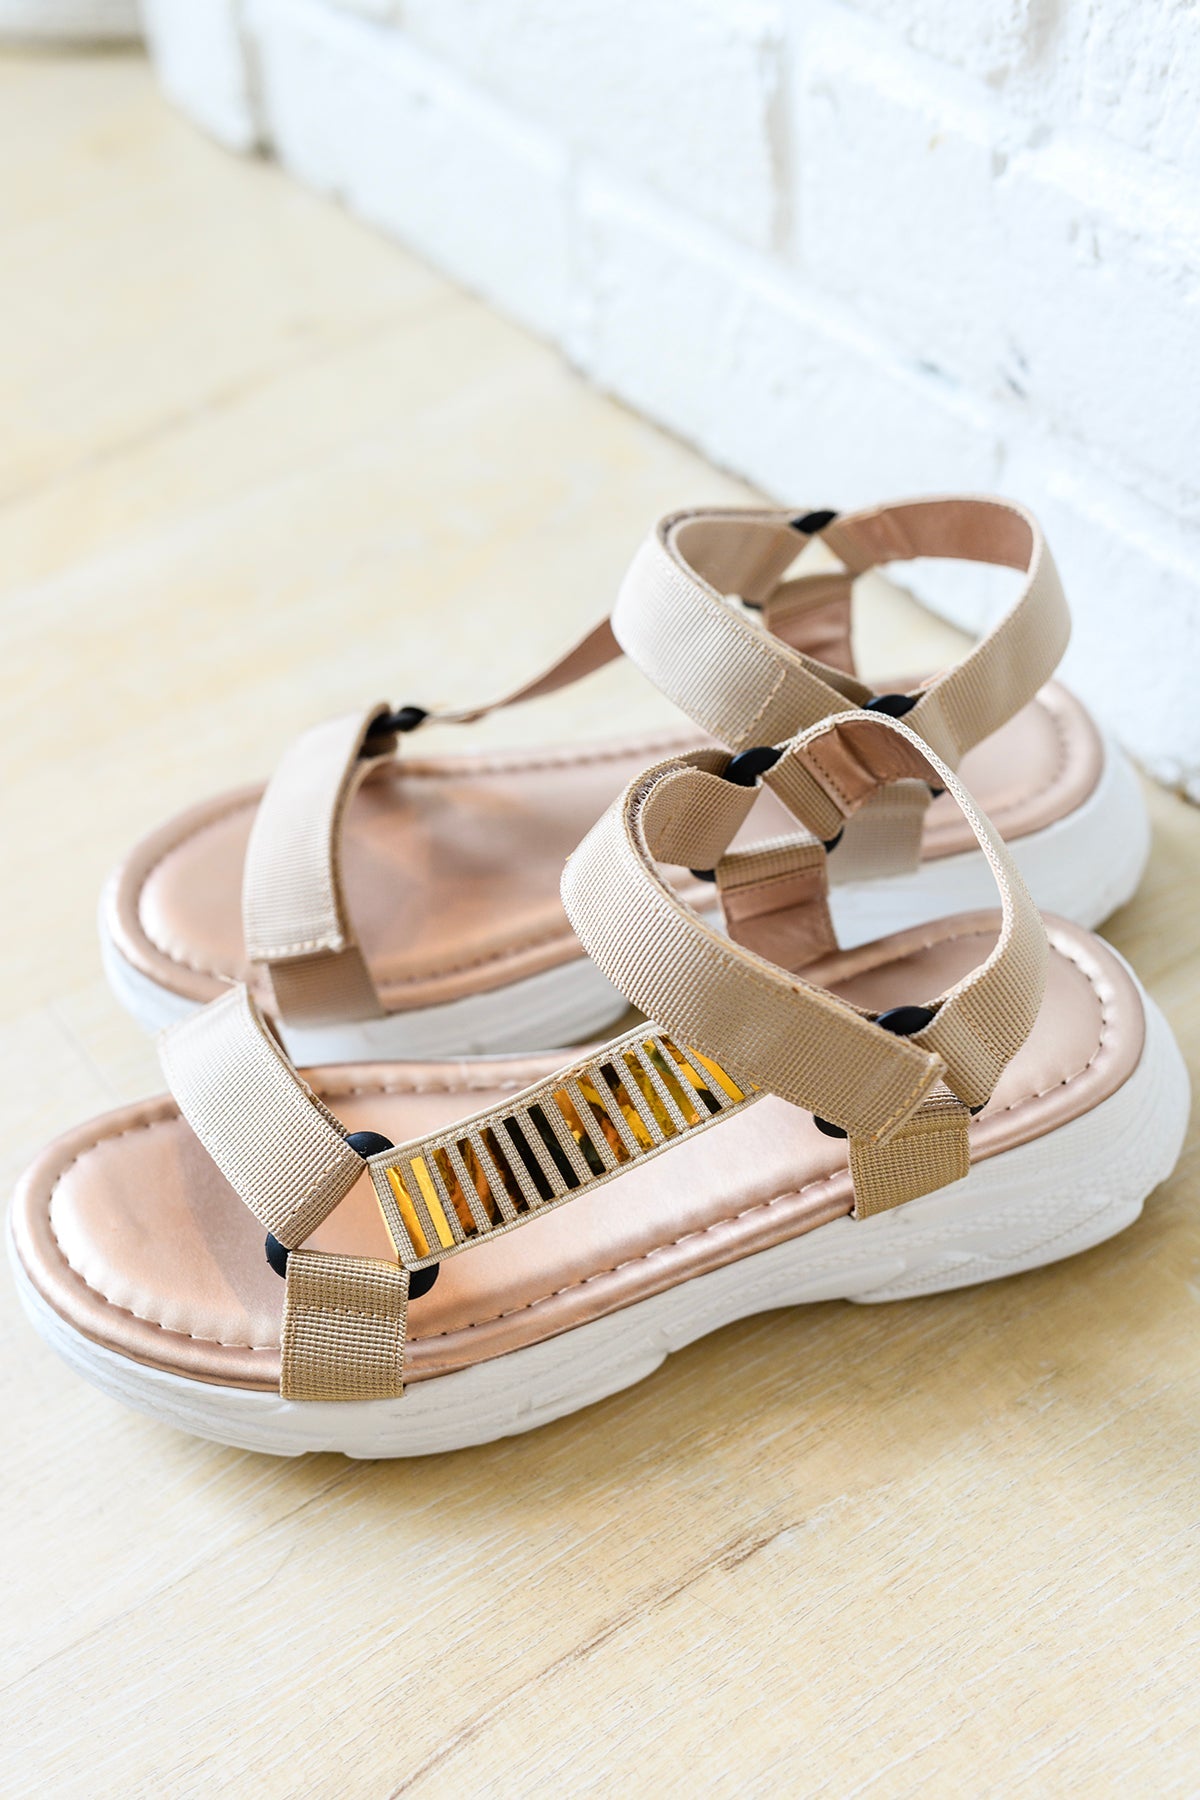 Sidewalk Strappy Sandals - Southern Divas Boutique